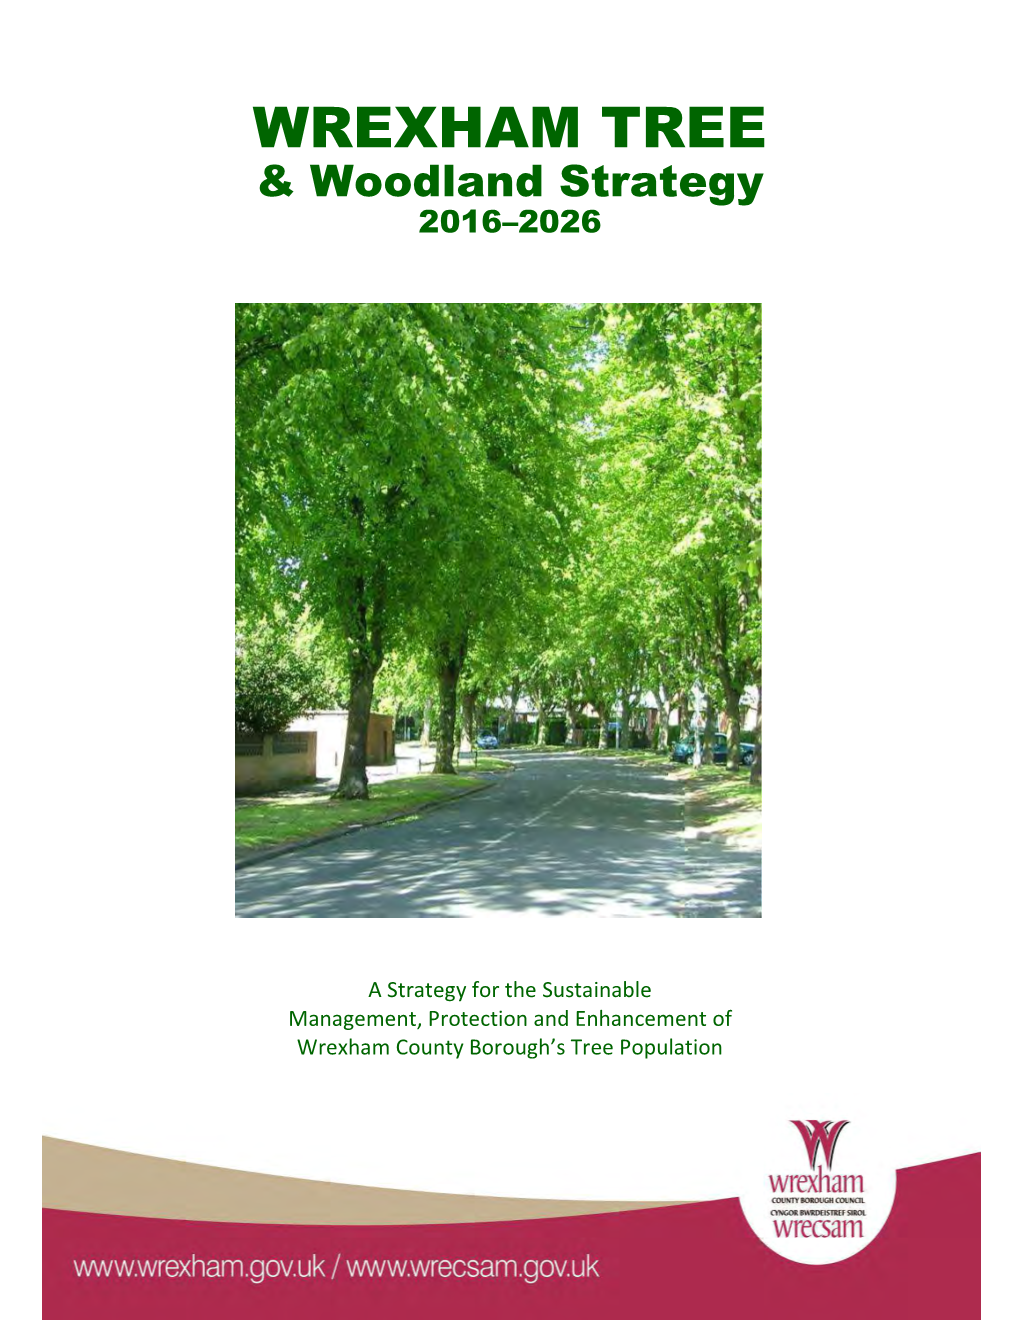 Wrexham Tree & Woodland Strategy 2016-2026